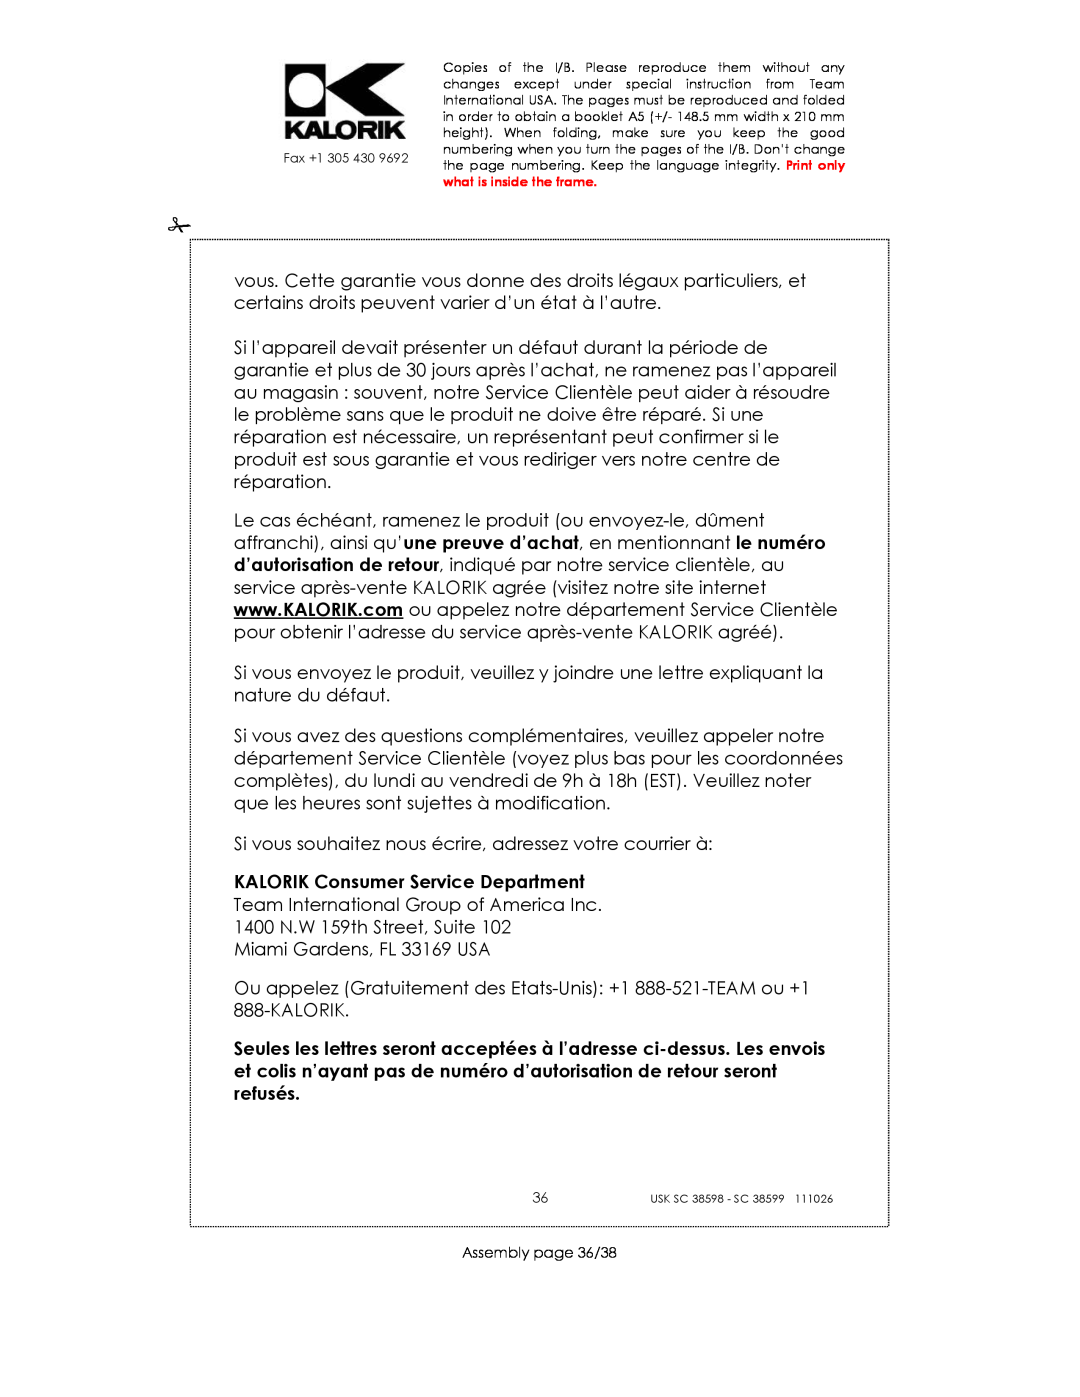 Kalorik usk sc 38598, 38599 manual KALORIK Consumer Service Department, Assembly page 36/38 